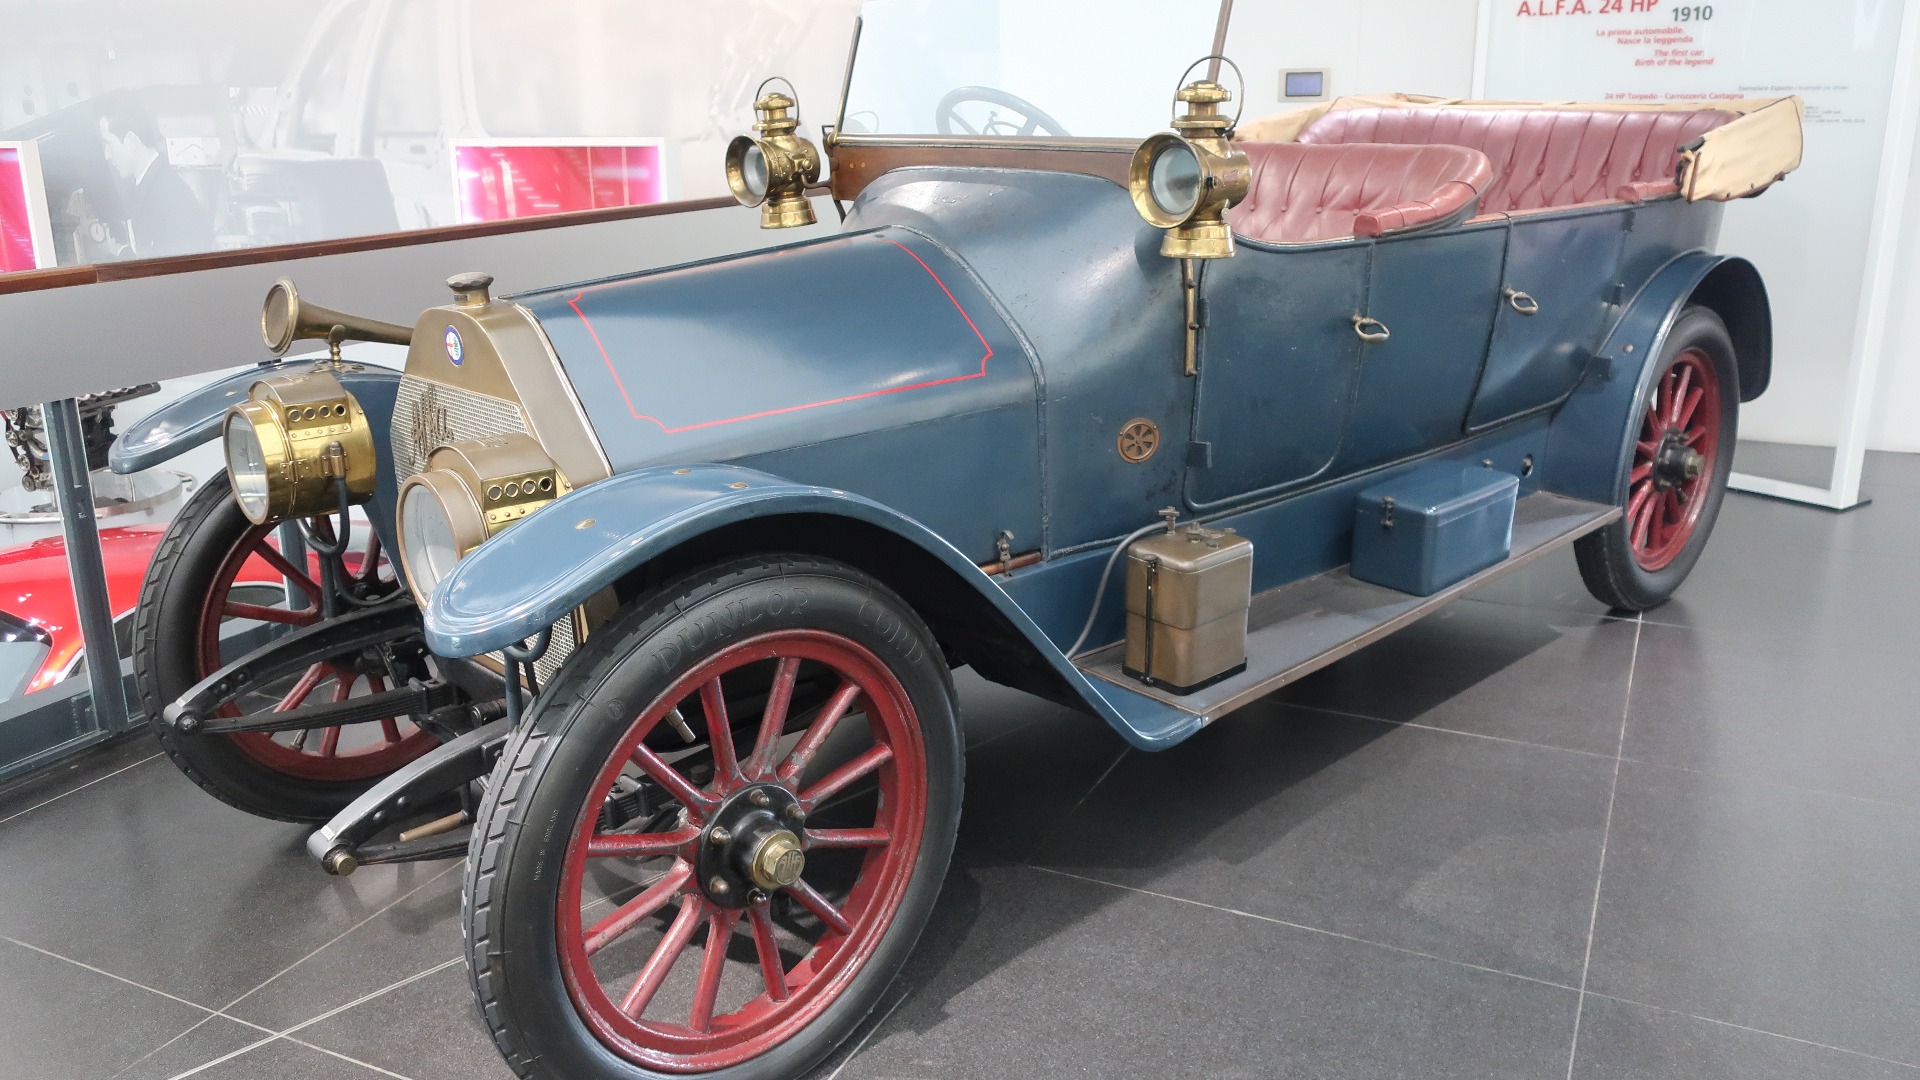 Museets eldste bil er denne A.L.F.A. 24 hp fra 1910, som var konsernets første produksjonsbil.